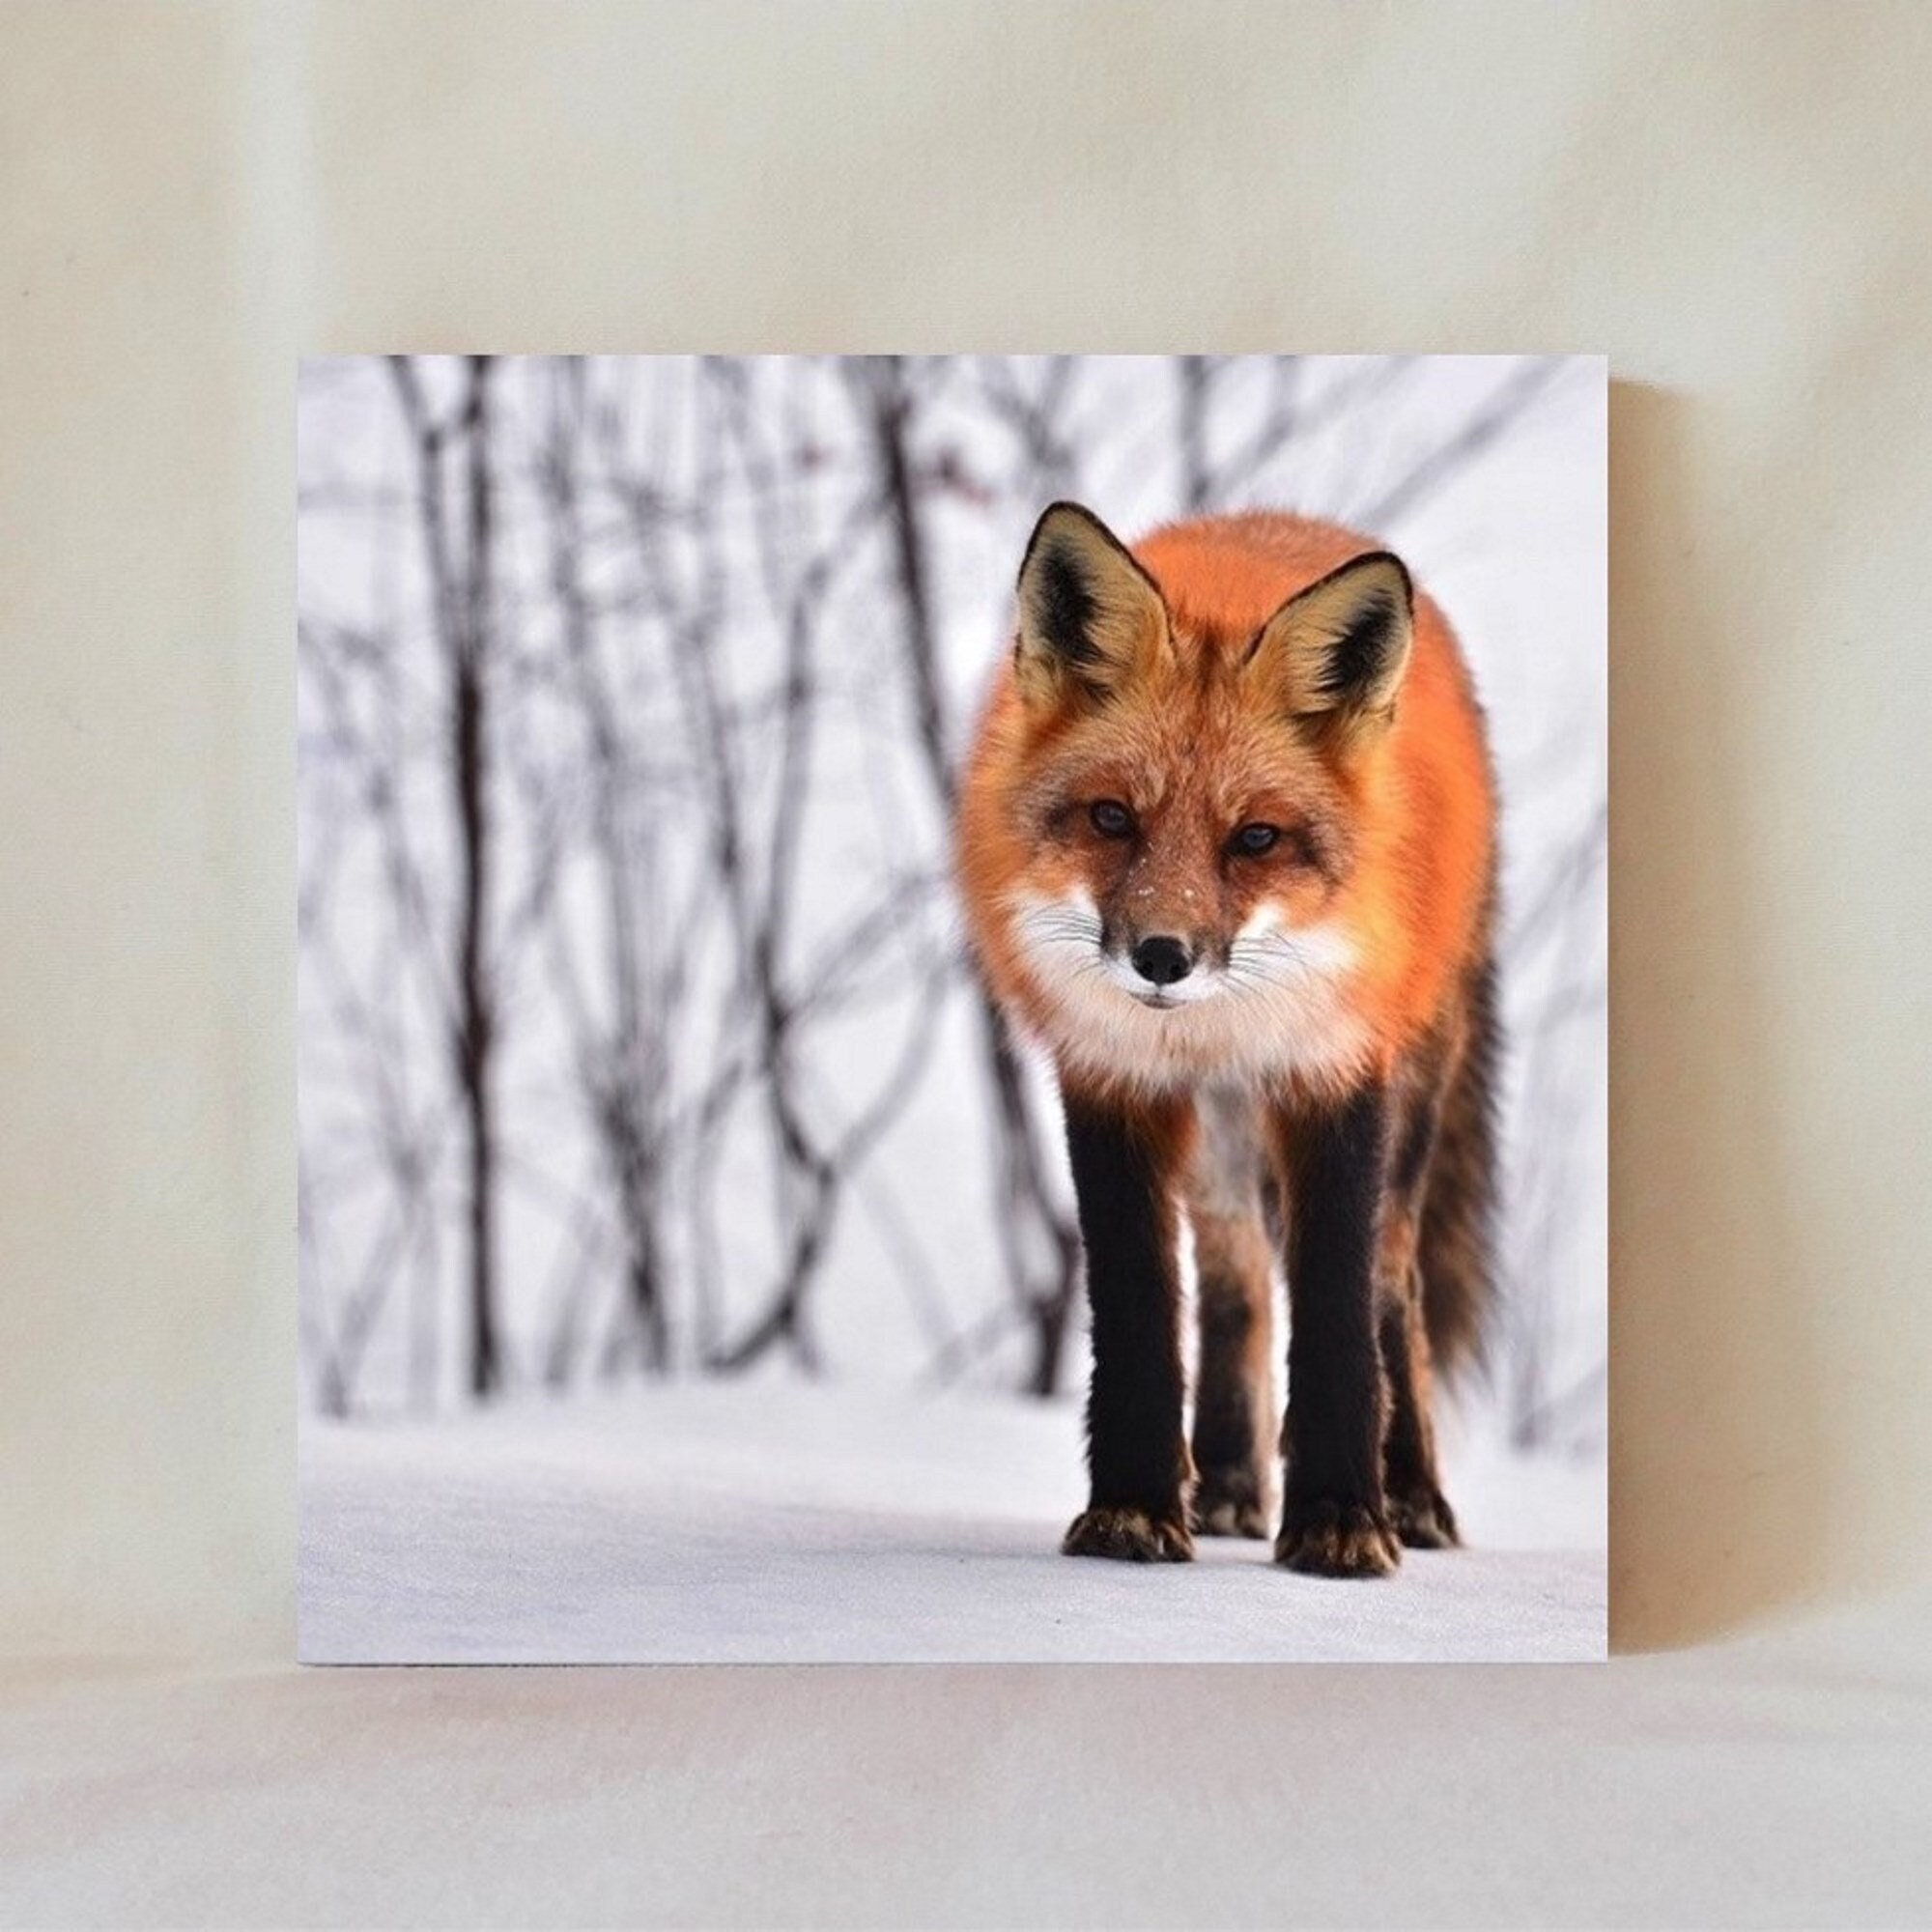 Decorative Tile 4 X 4 Red Fox Wild Animal - Etsy